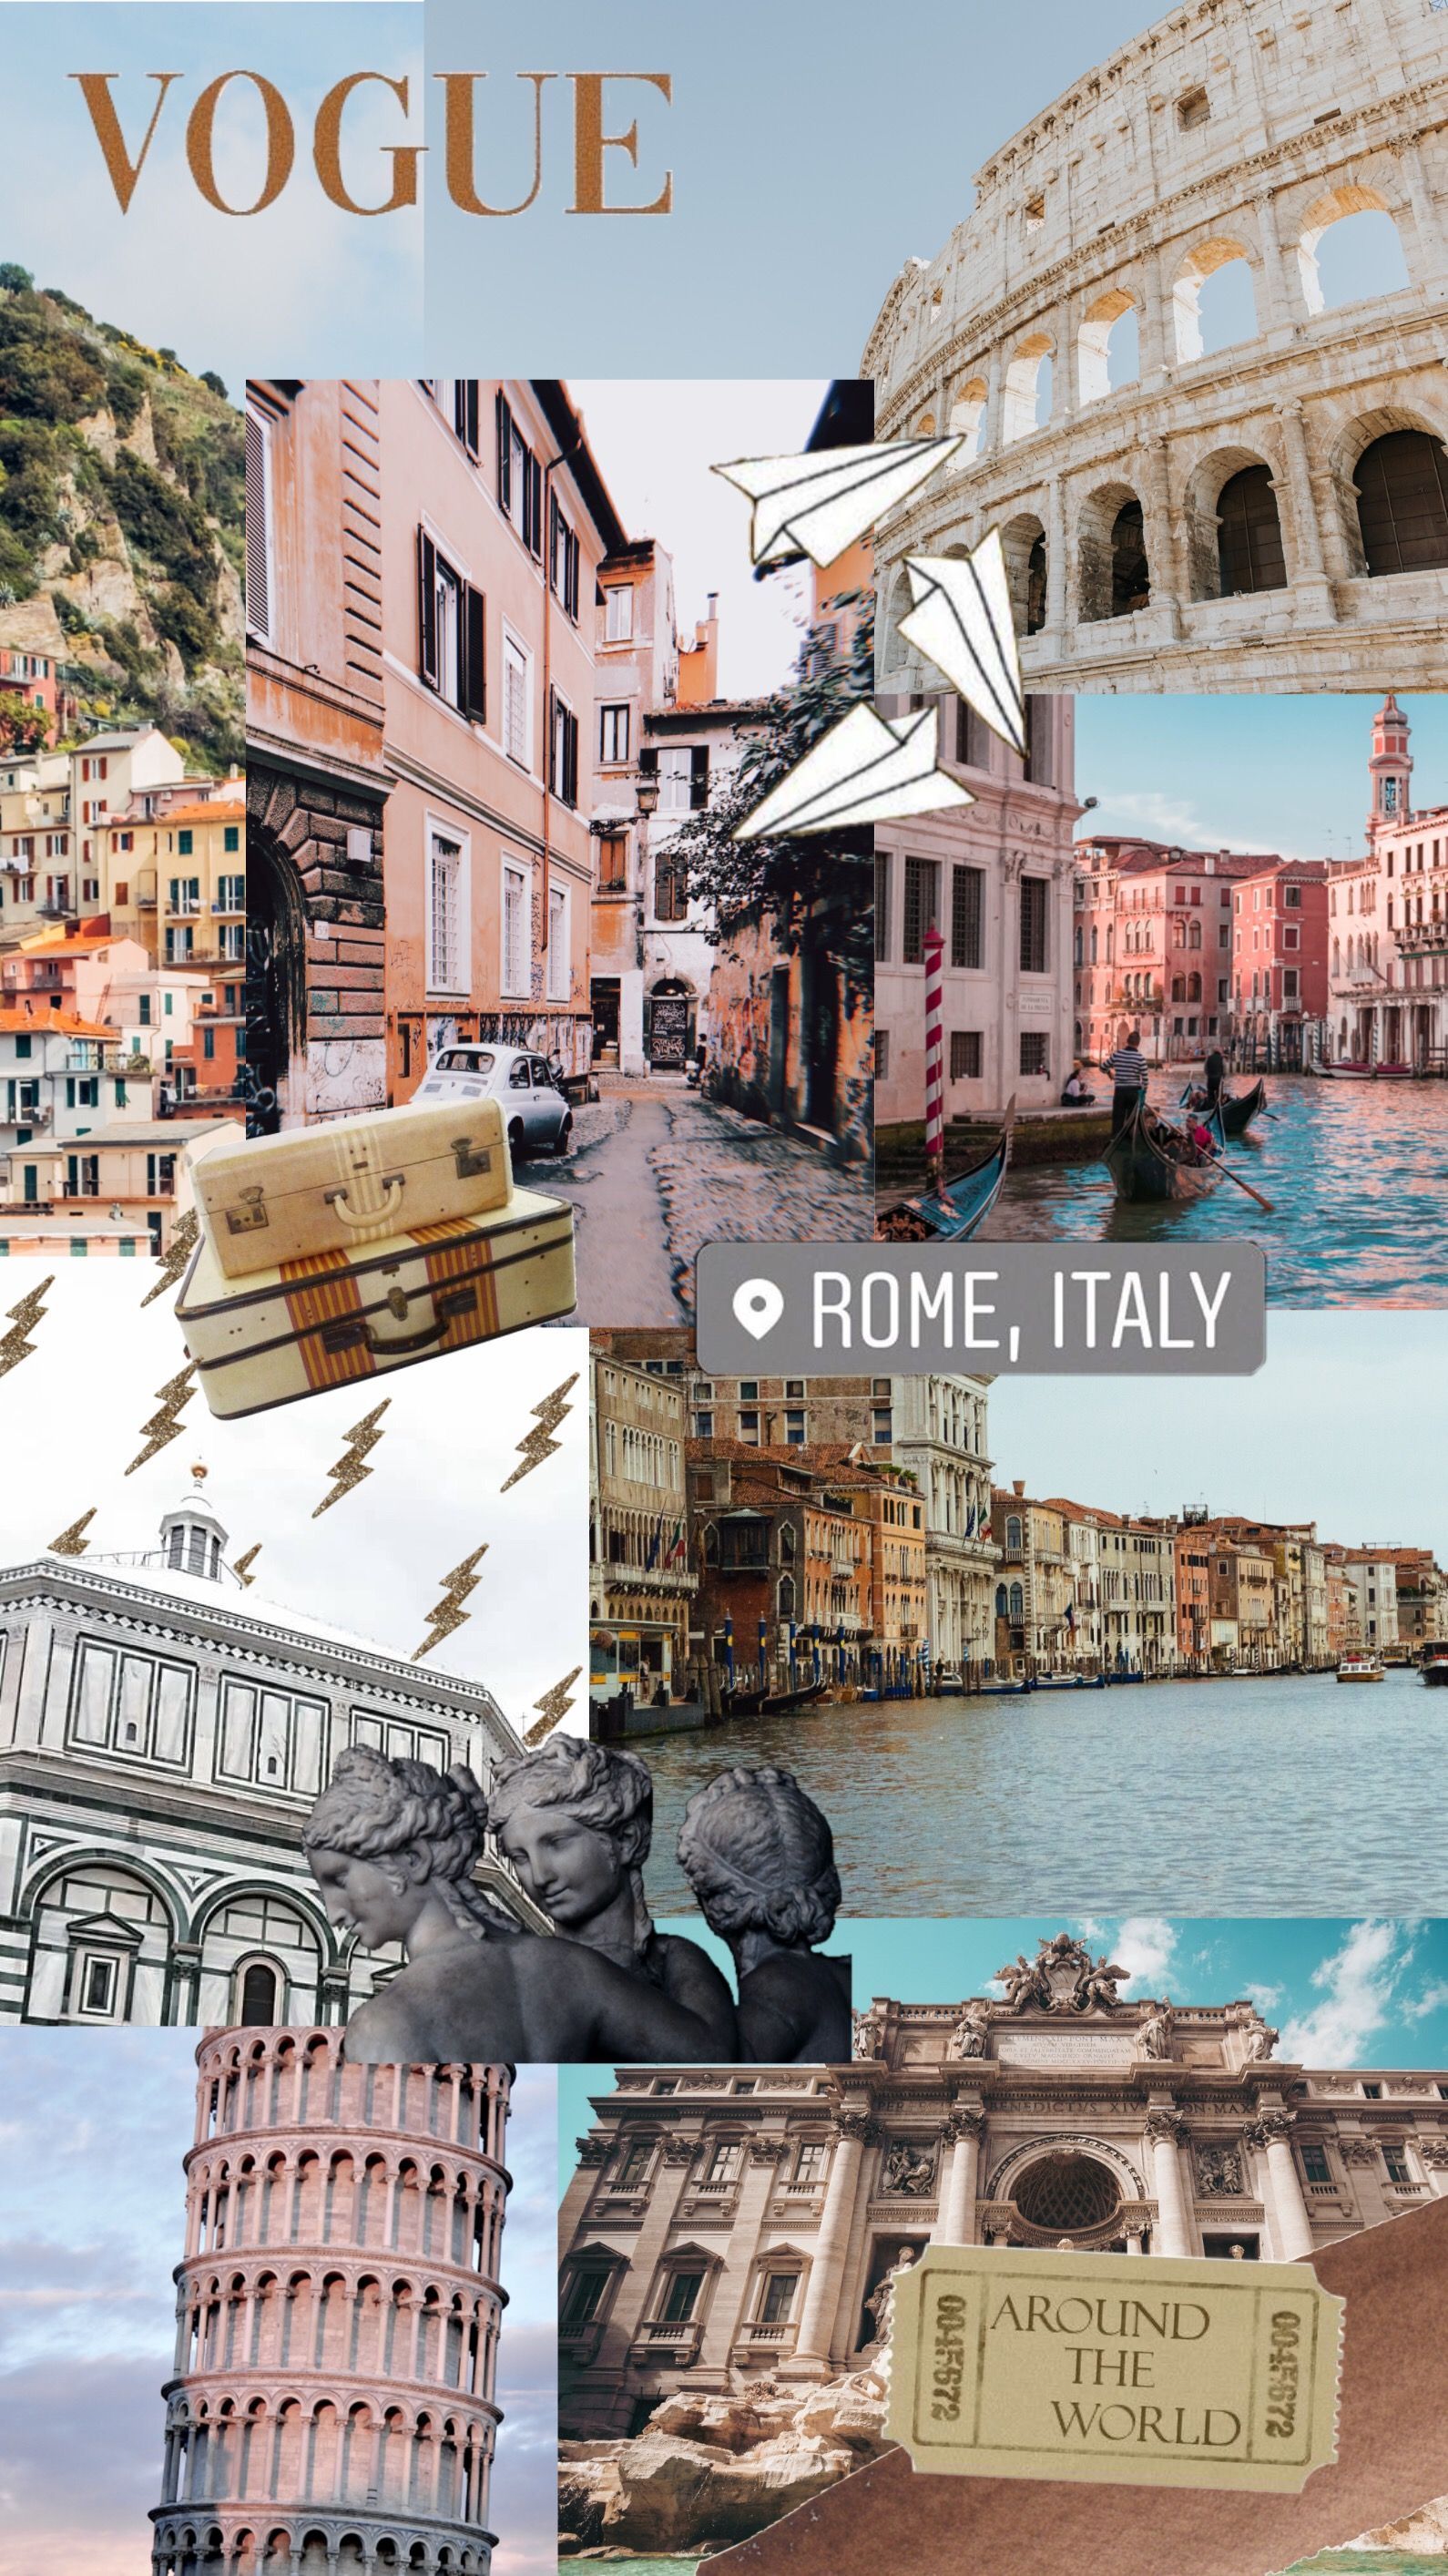 Travel Collage Wallpaper